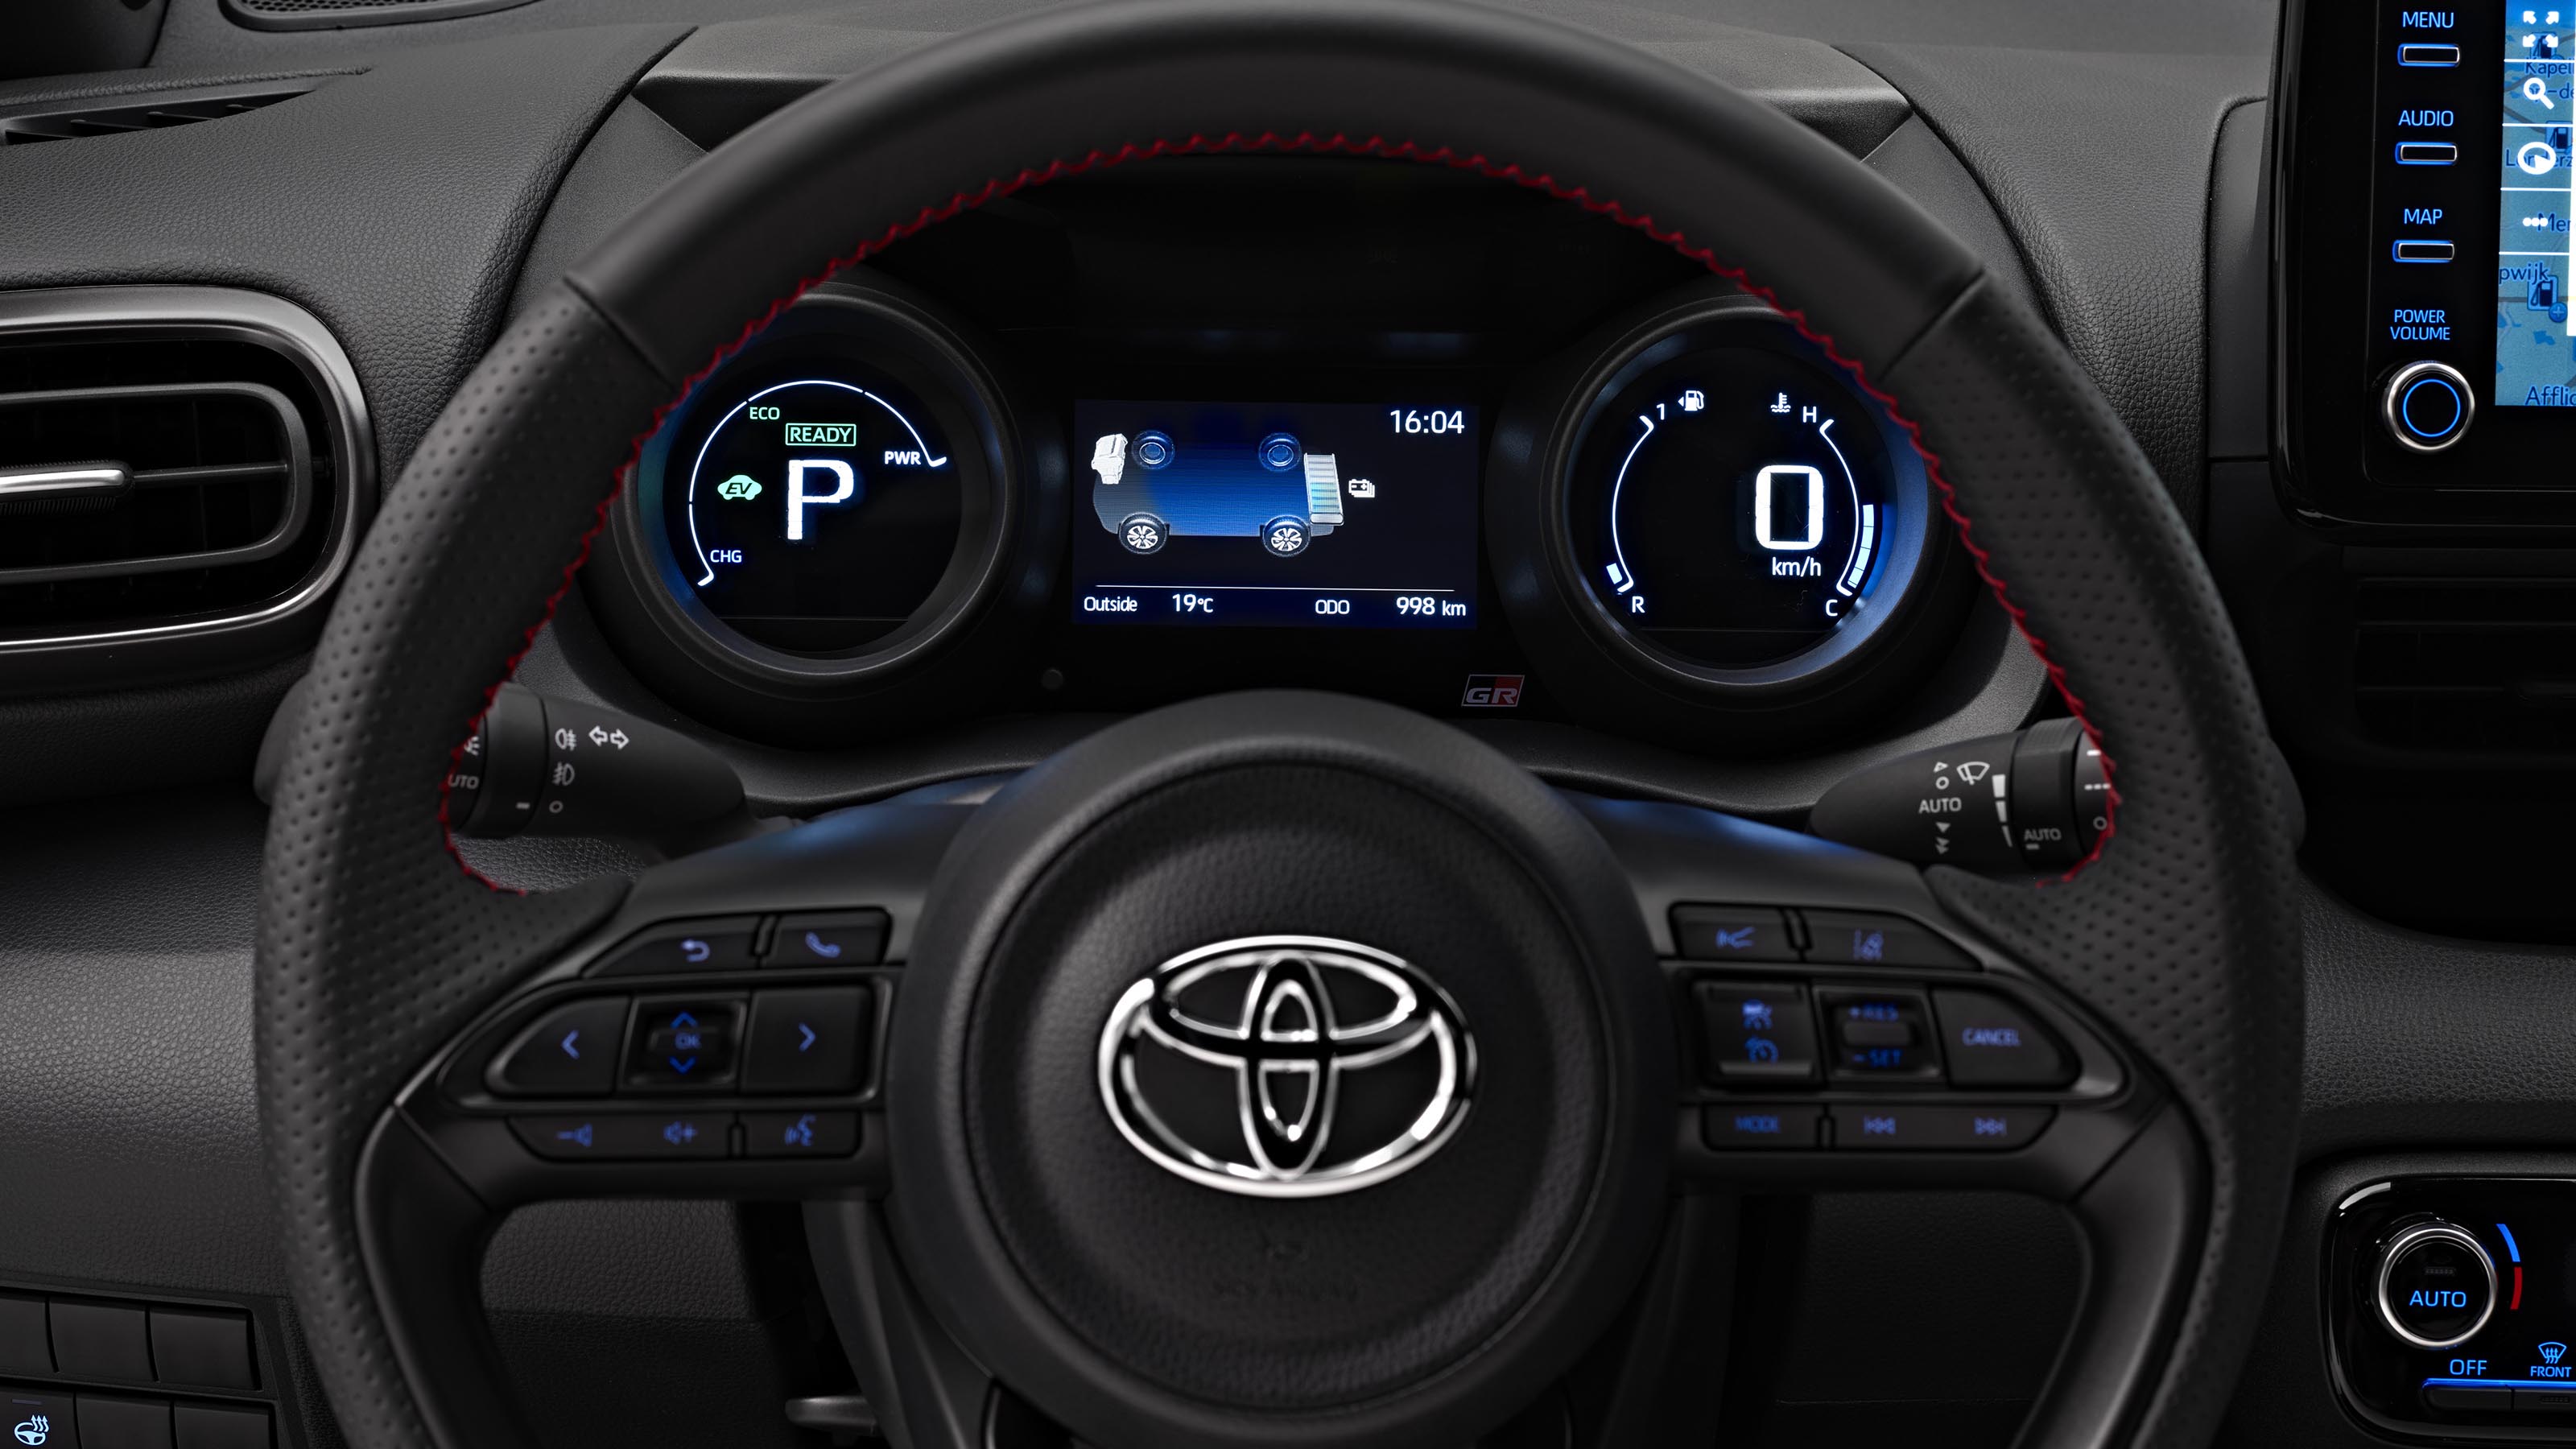 Toyota Yaris hybrid gets GR Sport variant for 2022